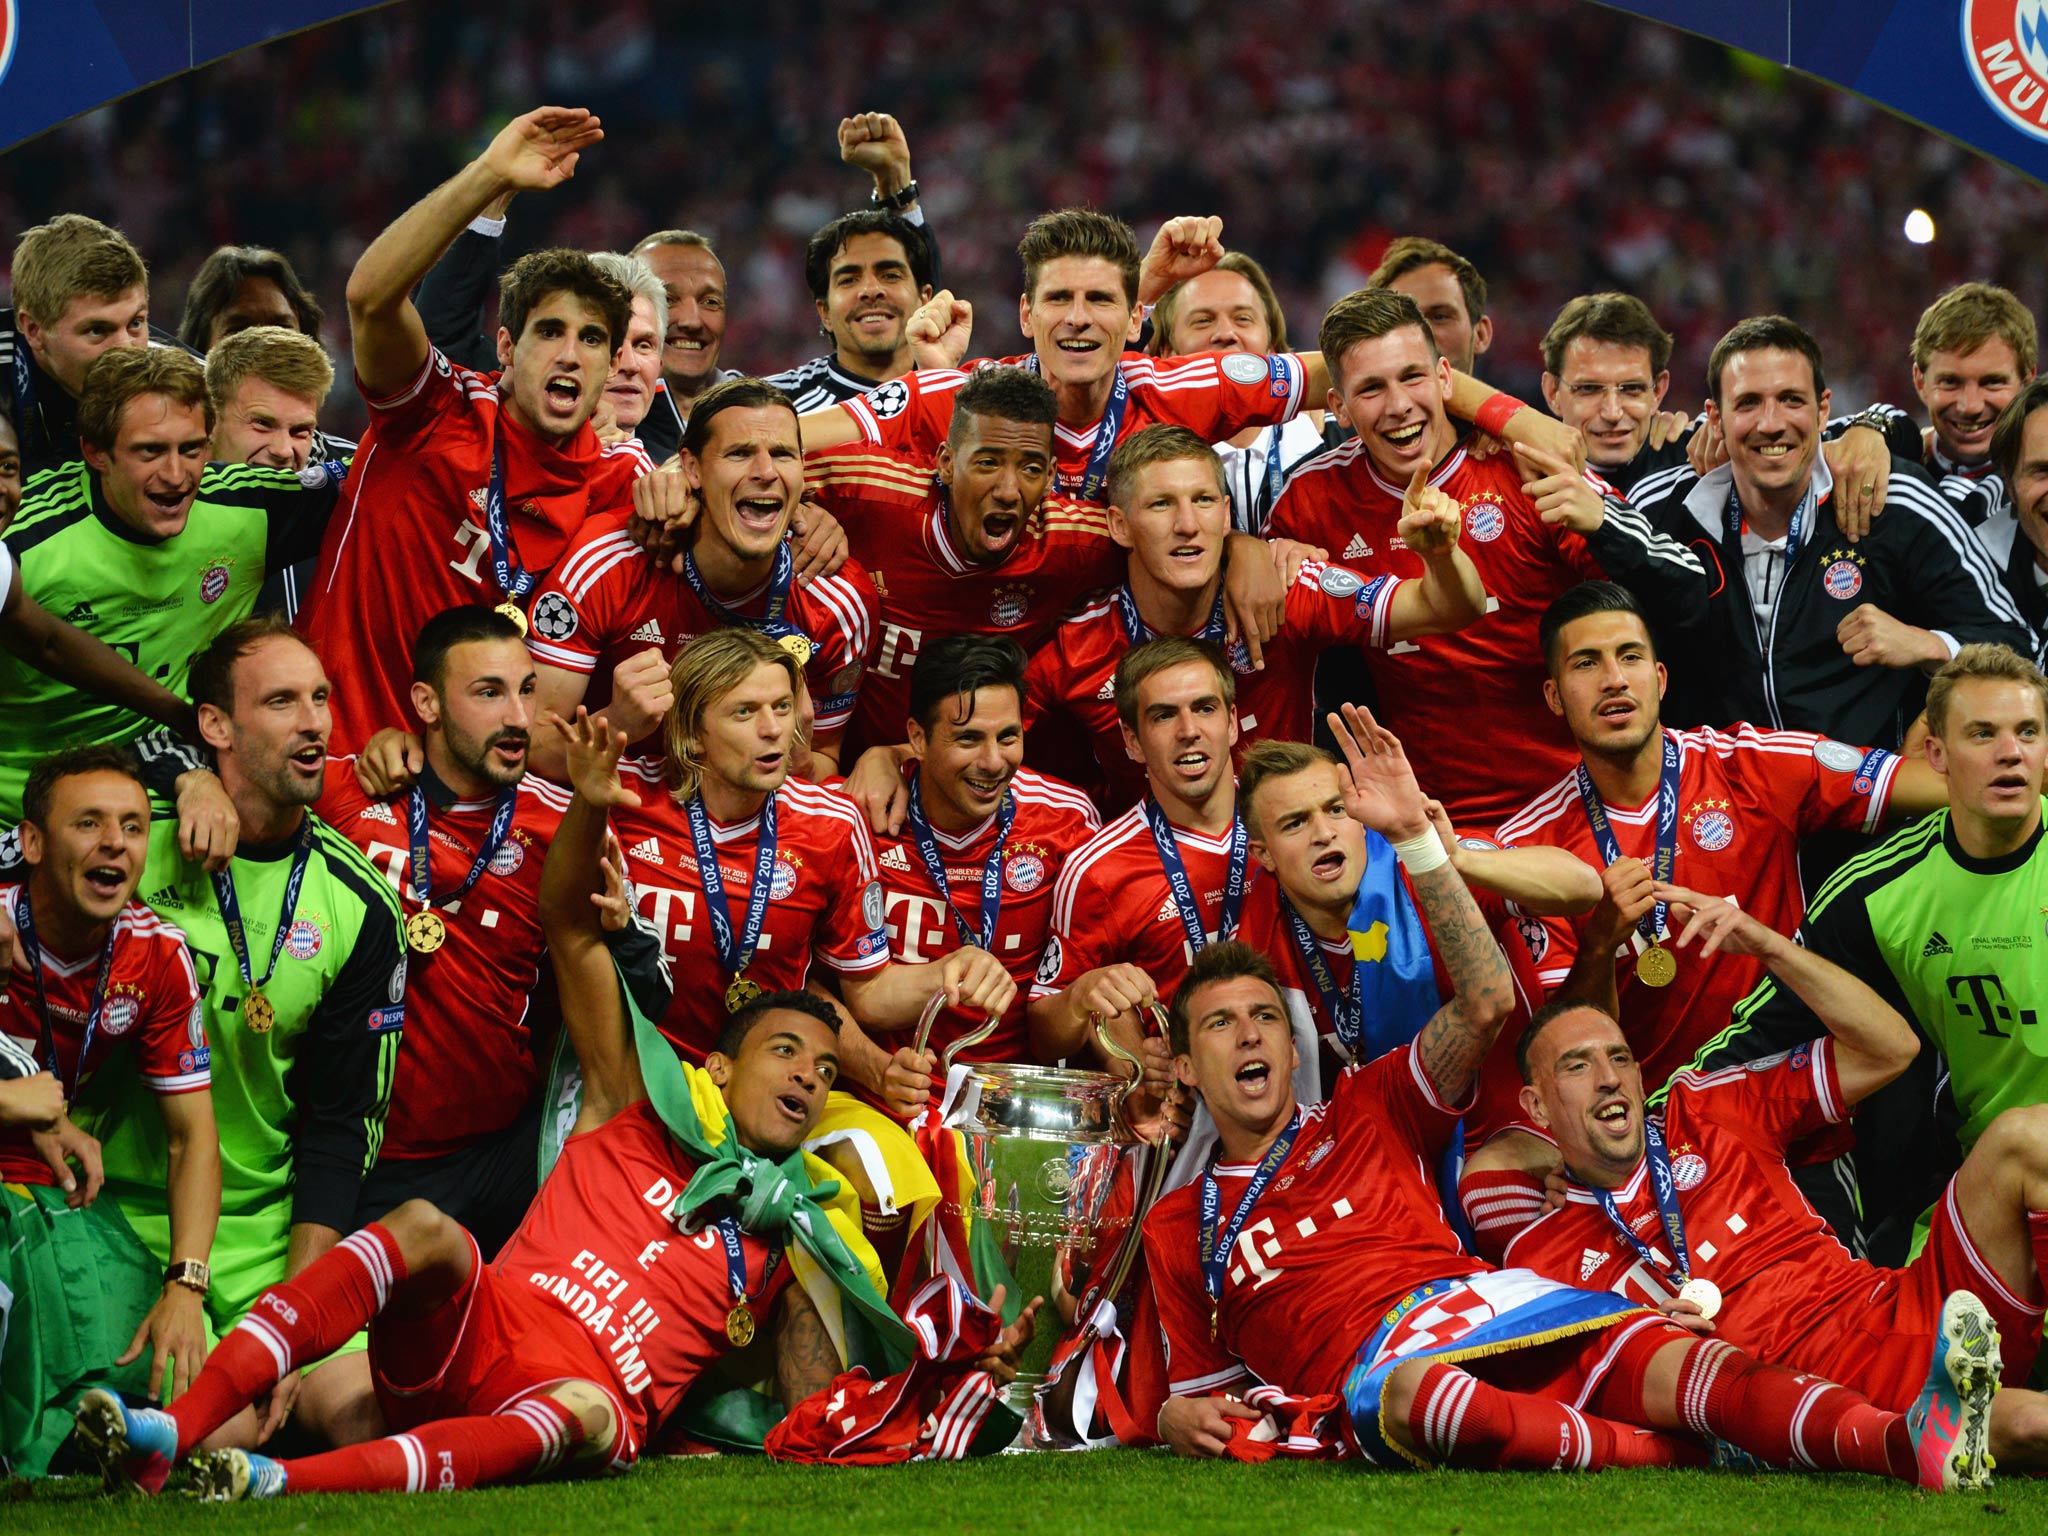 Bayern Munich celebrate winning the Champions League at Wembley in May